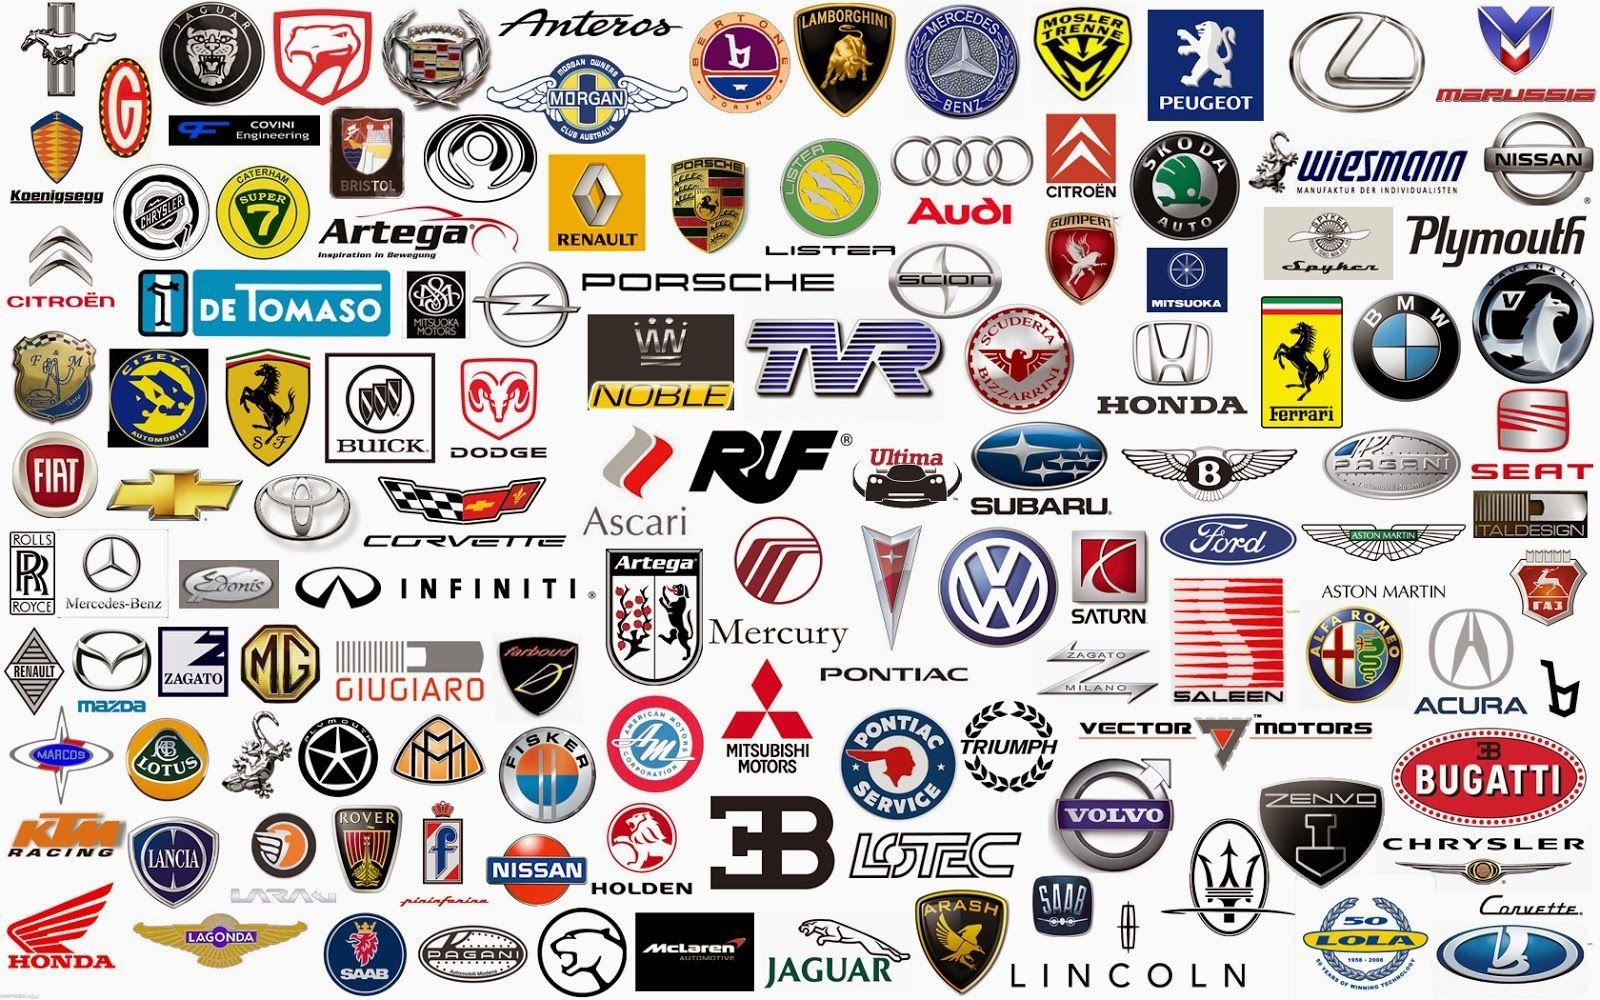 Car Company with Lion Logo - Auto Logos Images: Famous Car Company Logos